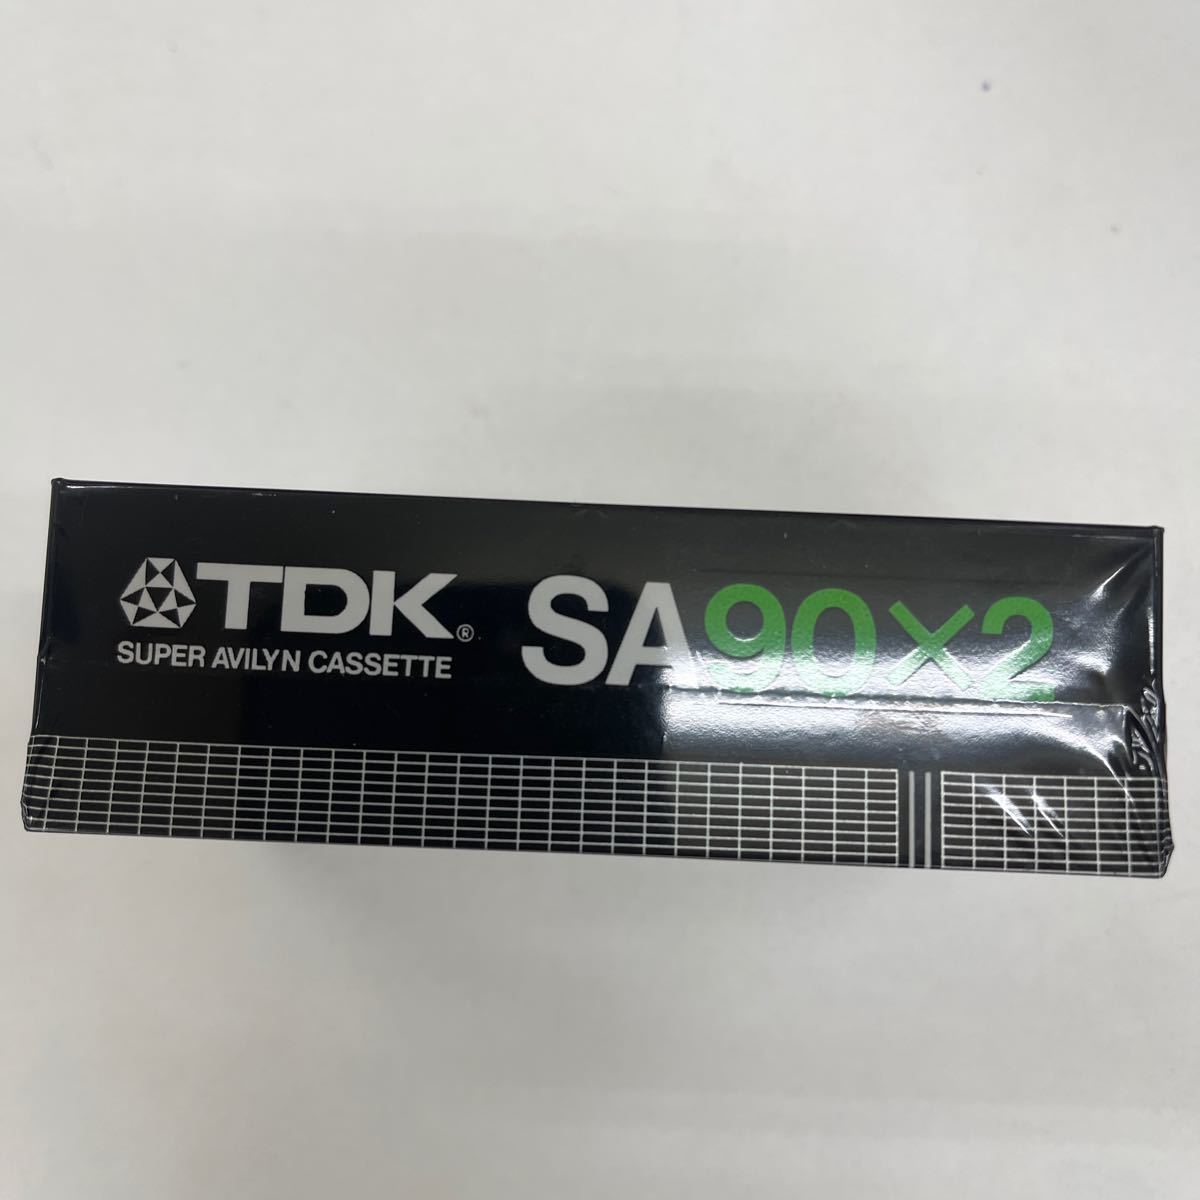 Y1101318 TDK SA90. 20PACK unused unopened storage goods cassette tape retro 